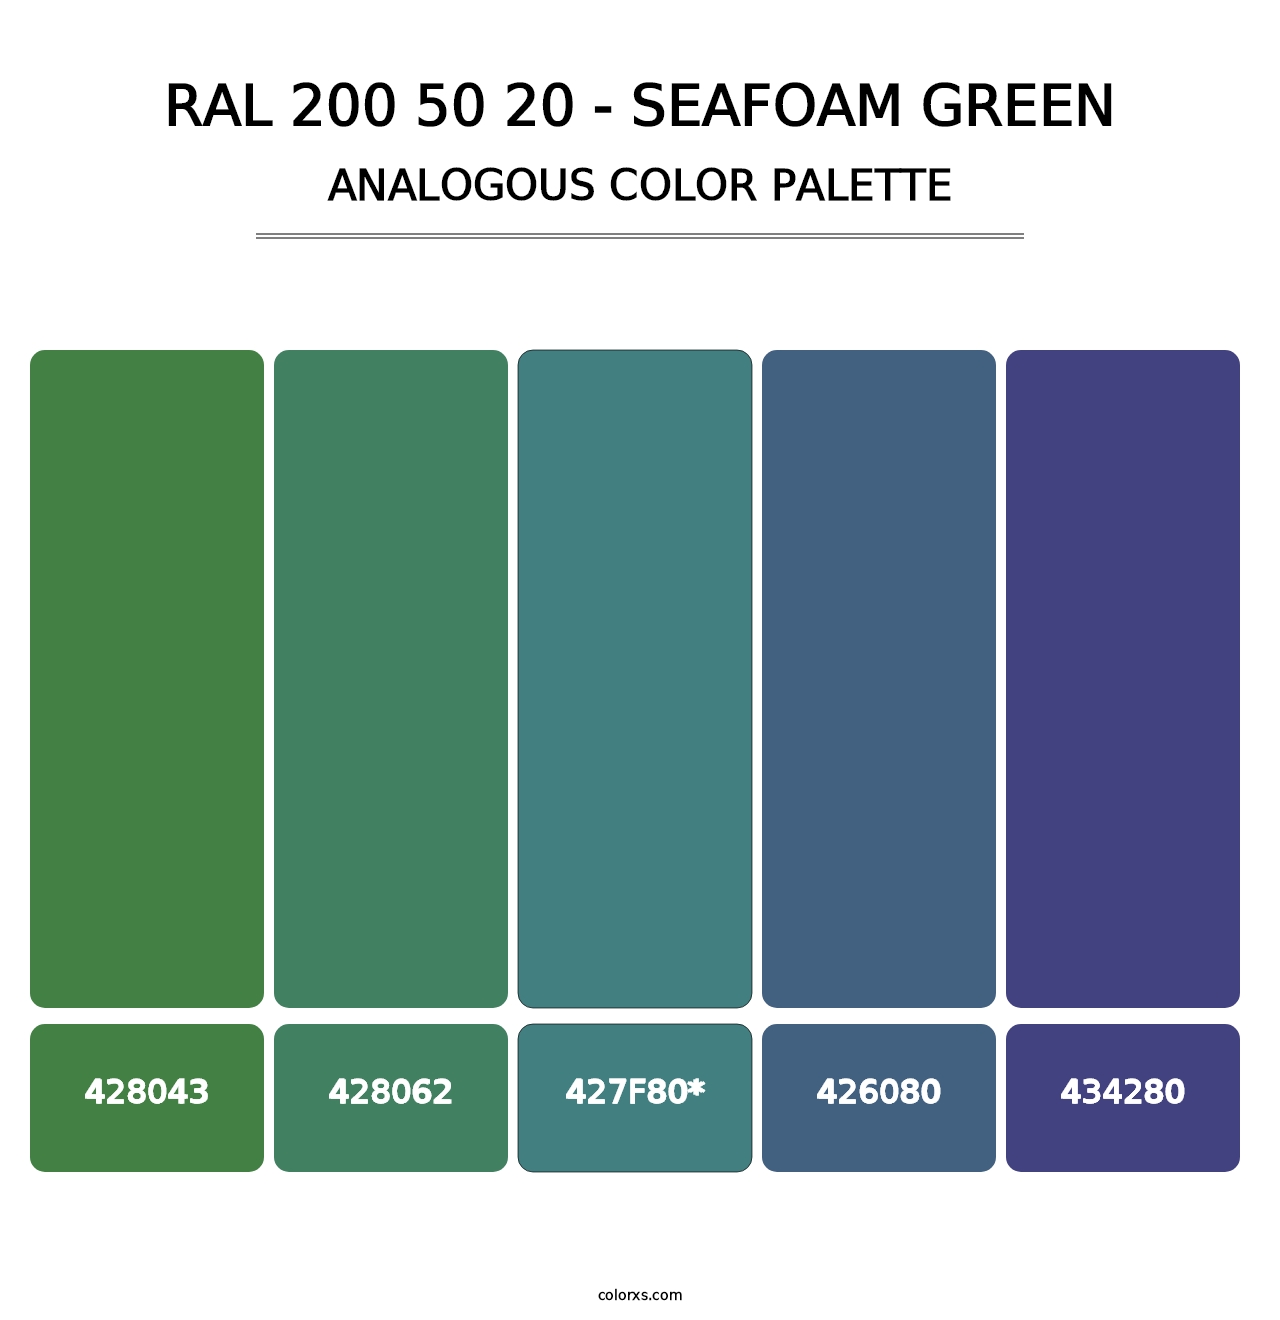 RAL 200 50 20 - Seafoam Green - Analogous Color Palette